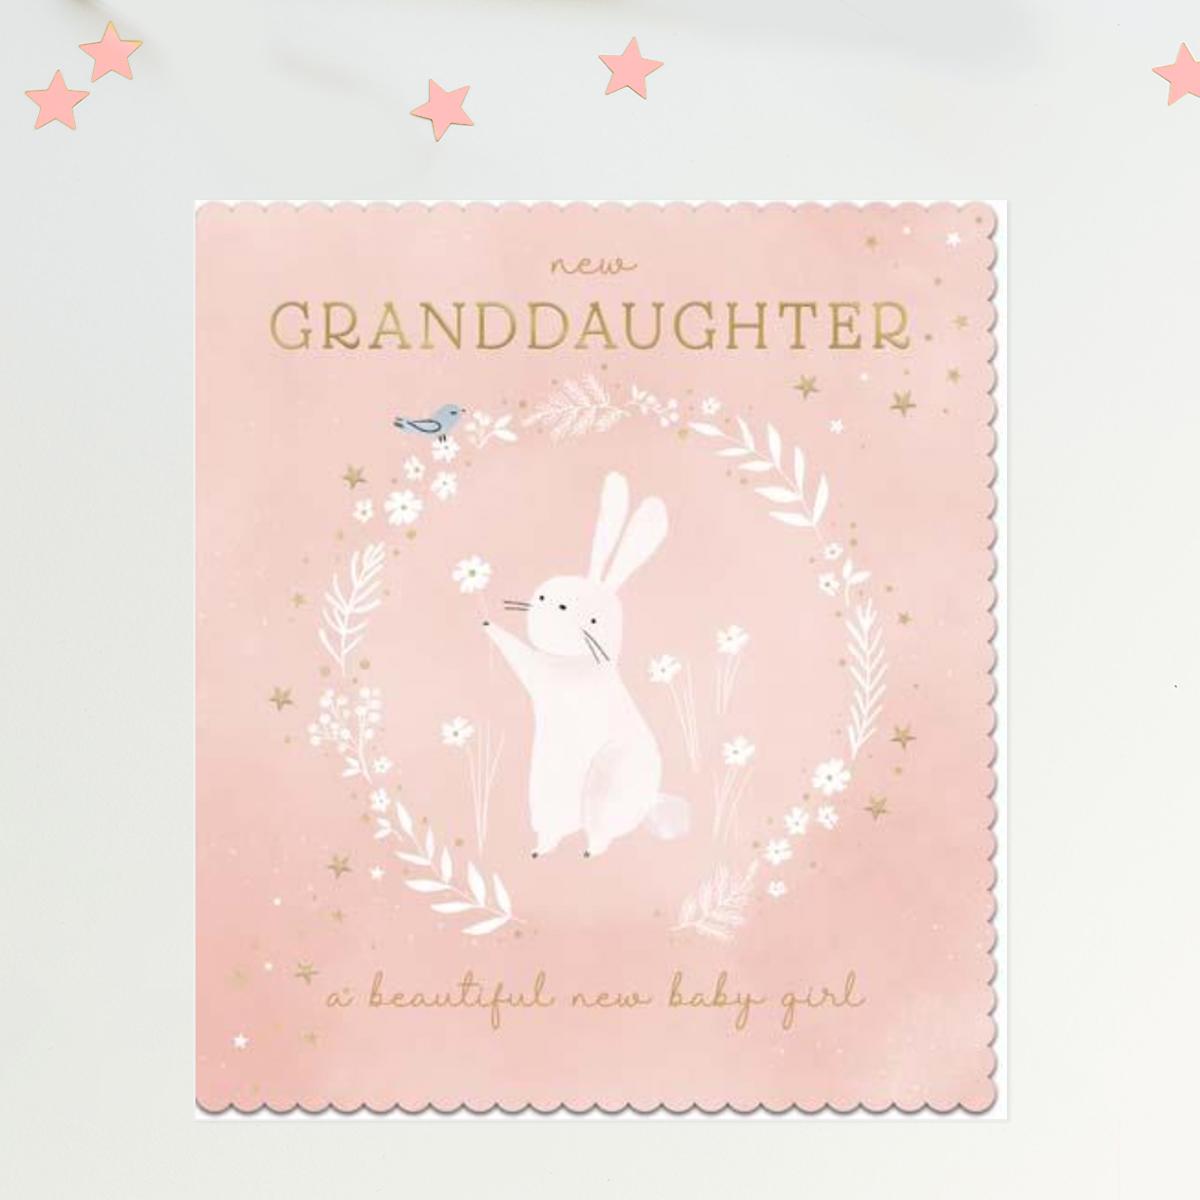 New Granddaughter Congratulations Card